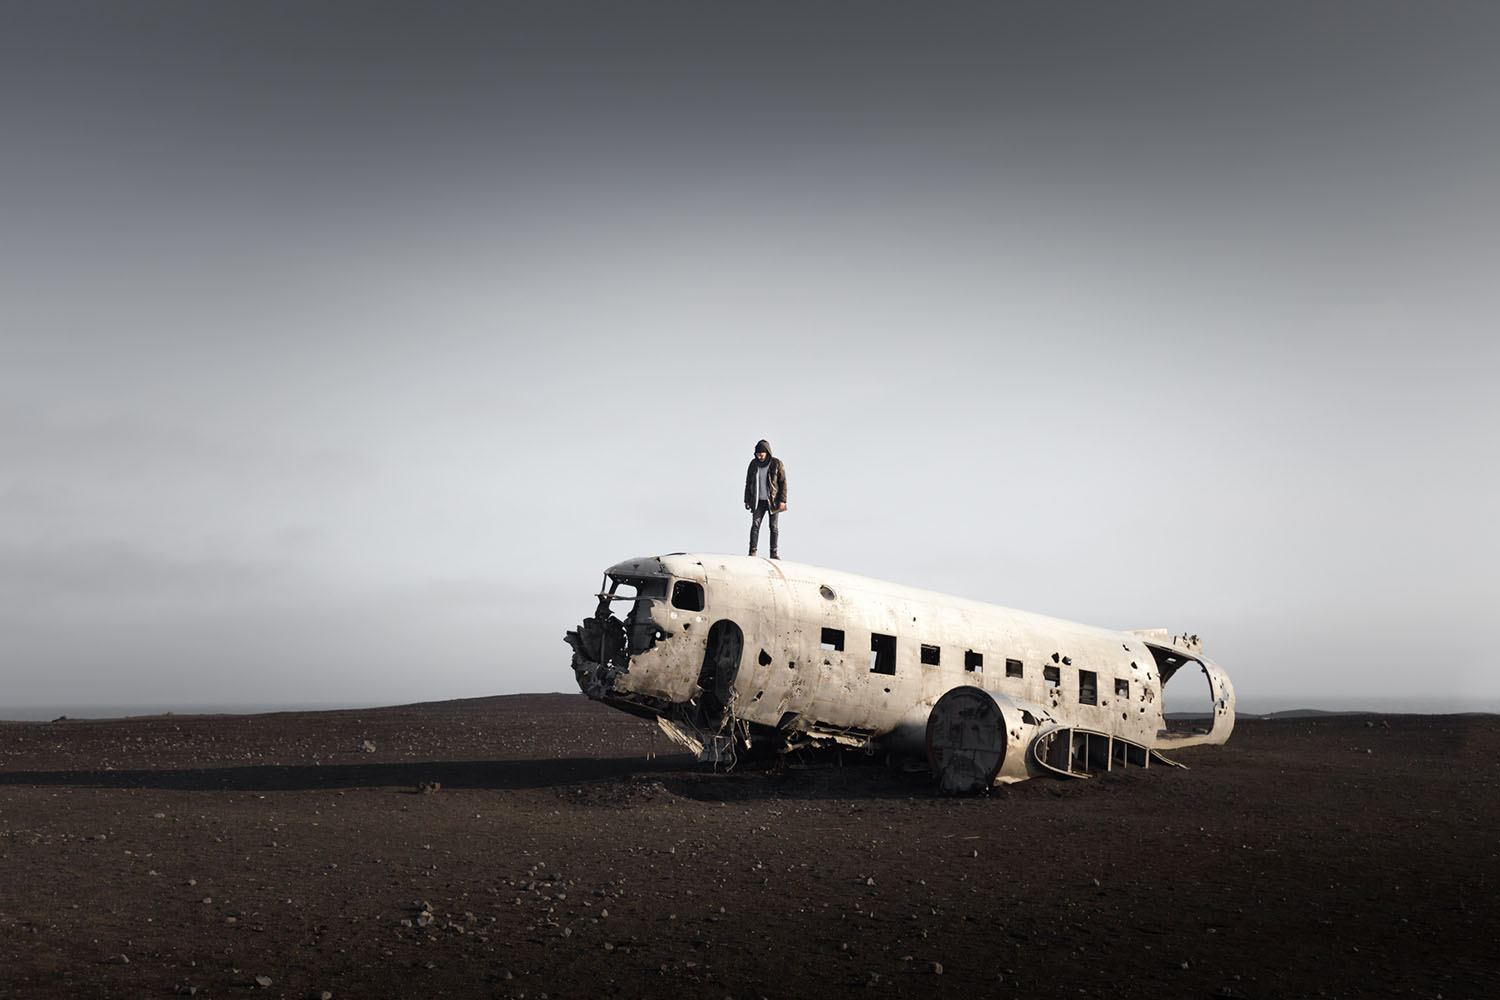 Island - Plane wreck DC-3 © Maik Lipp